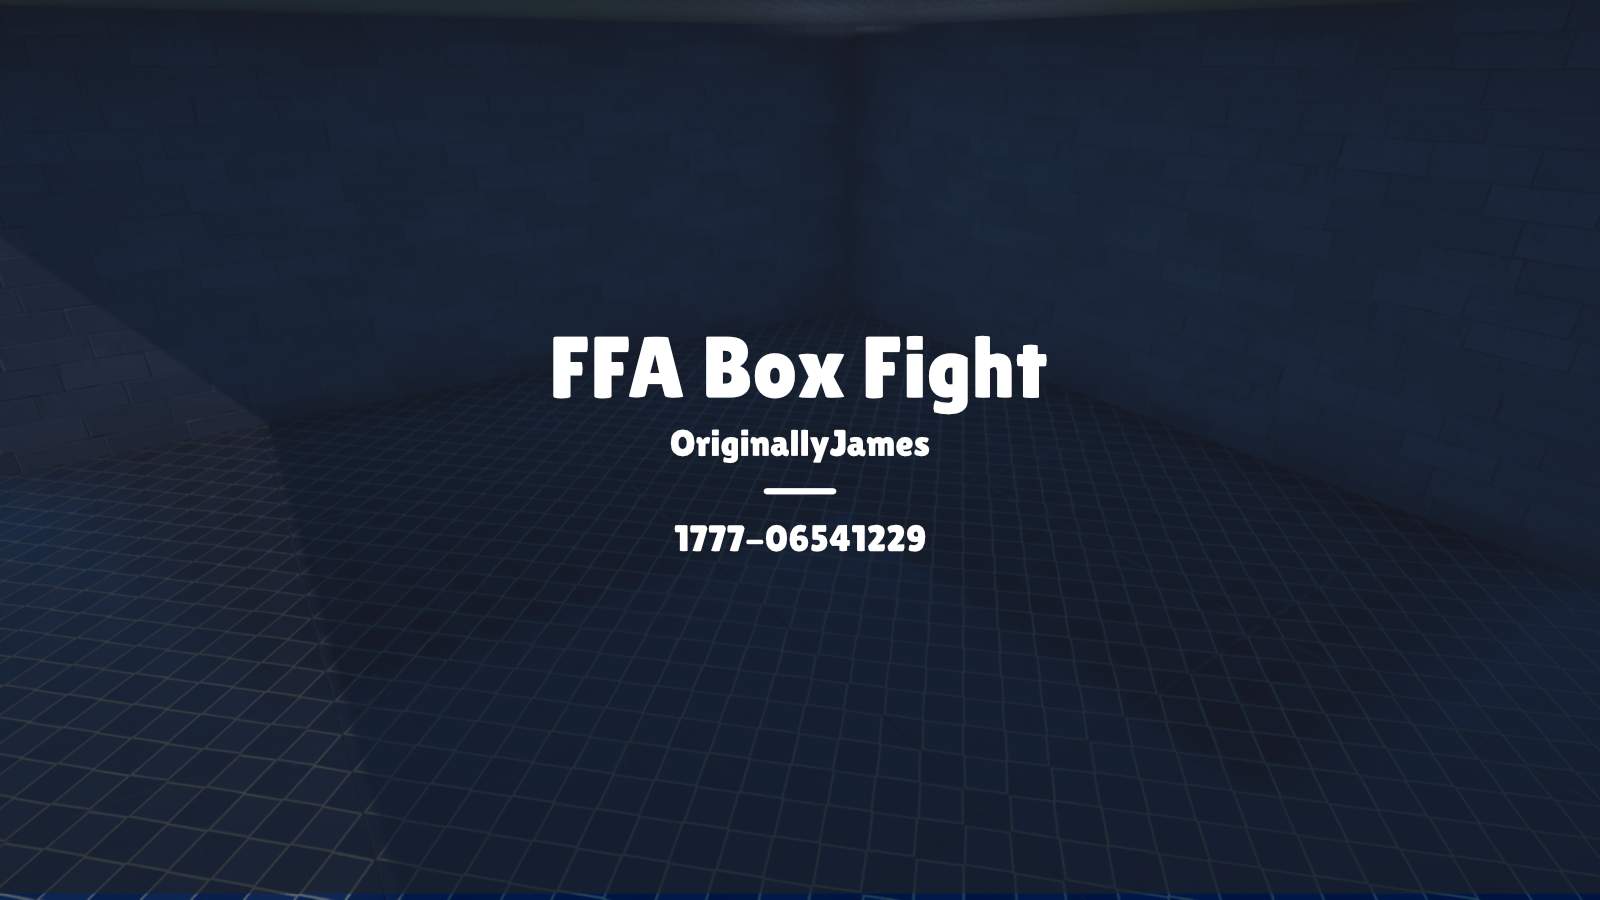 FFA BOX FIGHT